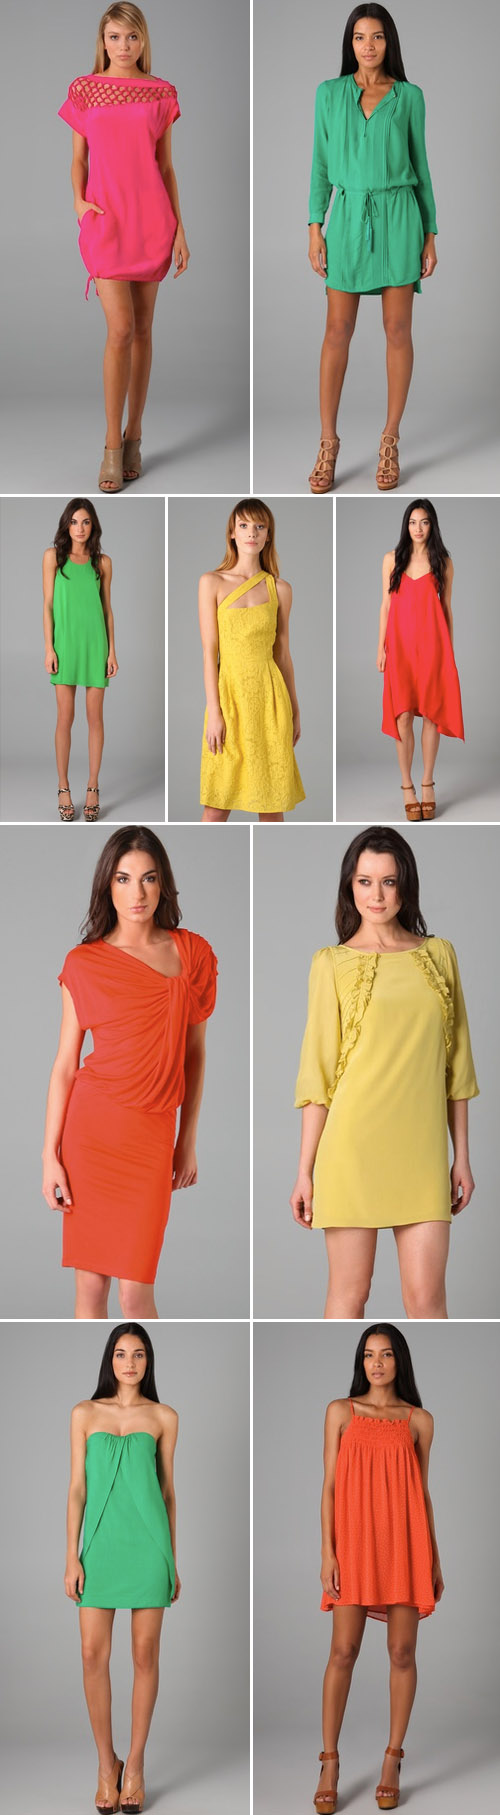 bright colored dresses